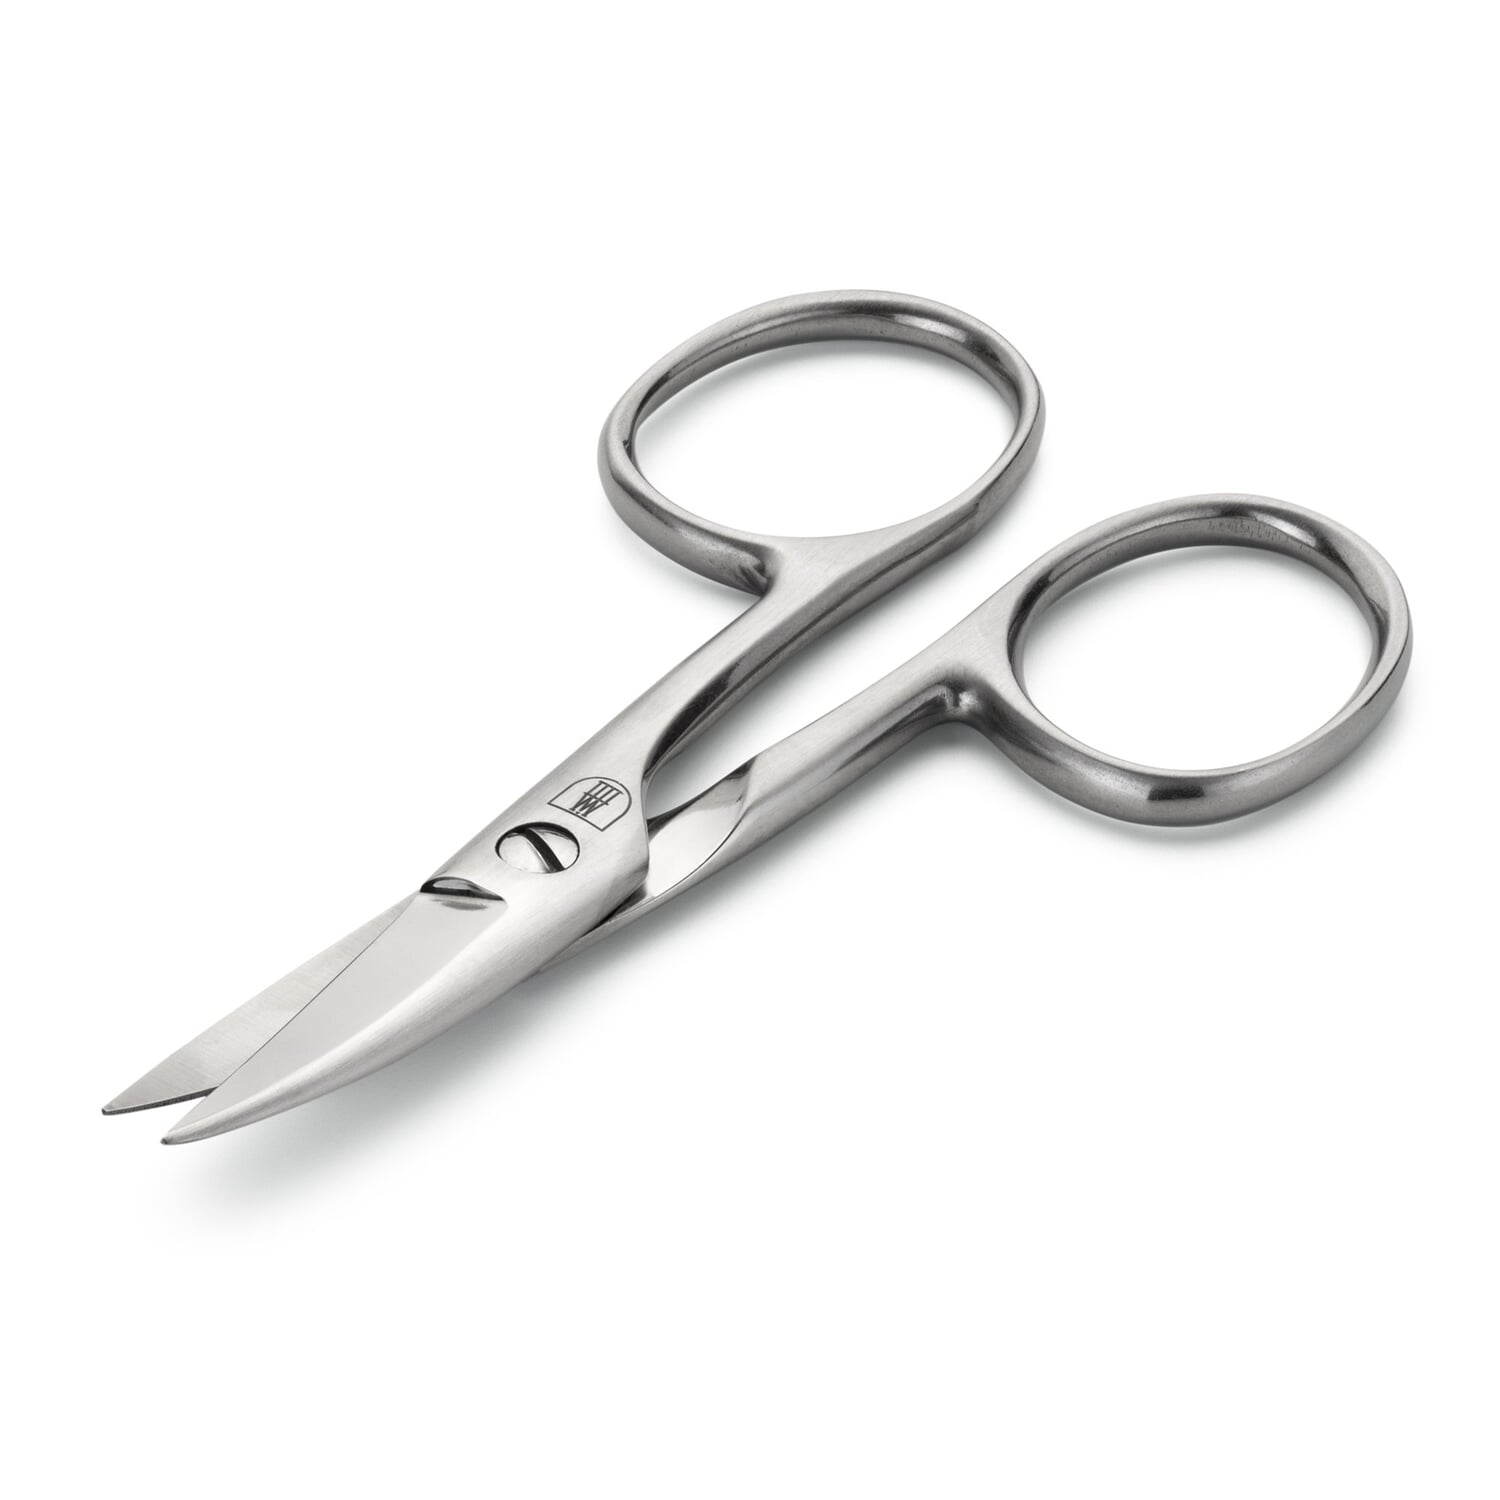 https://assets.manufactum.de/p/204/204904/204904_02.jpg/nail-scissors-stainless-steel.jpg?profile=pdsmain_1500